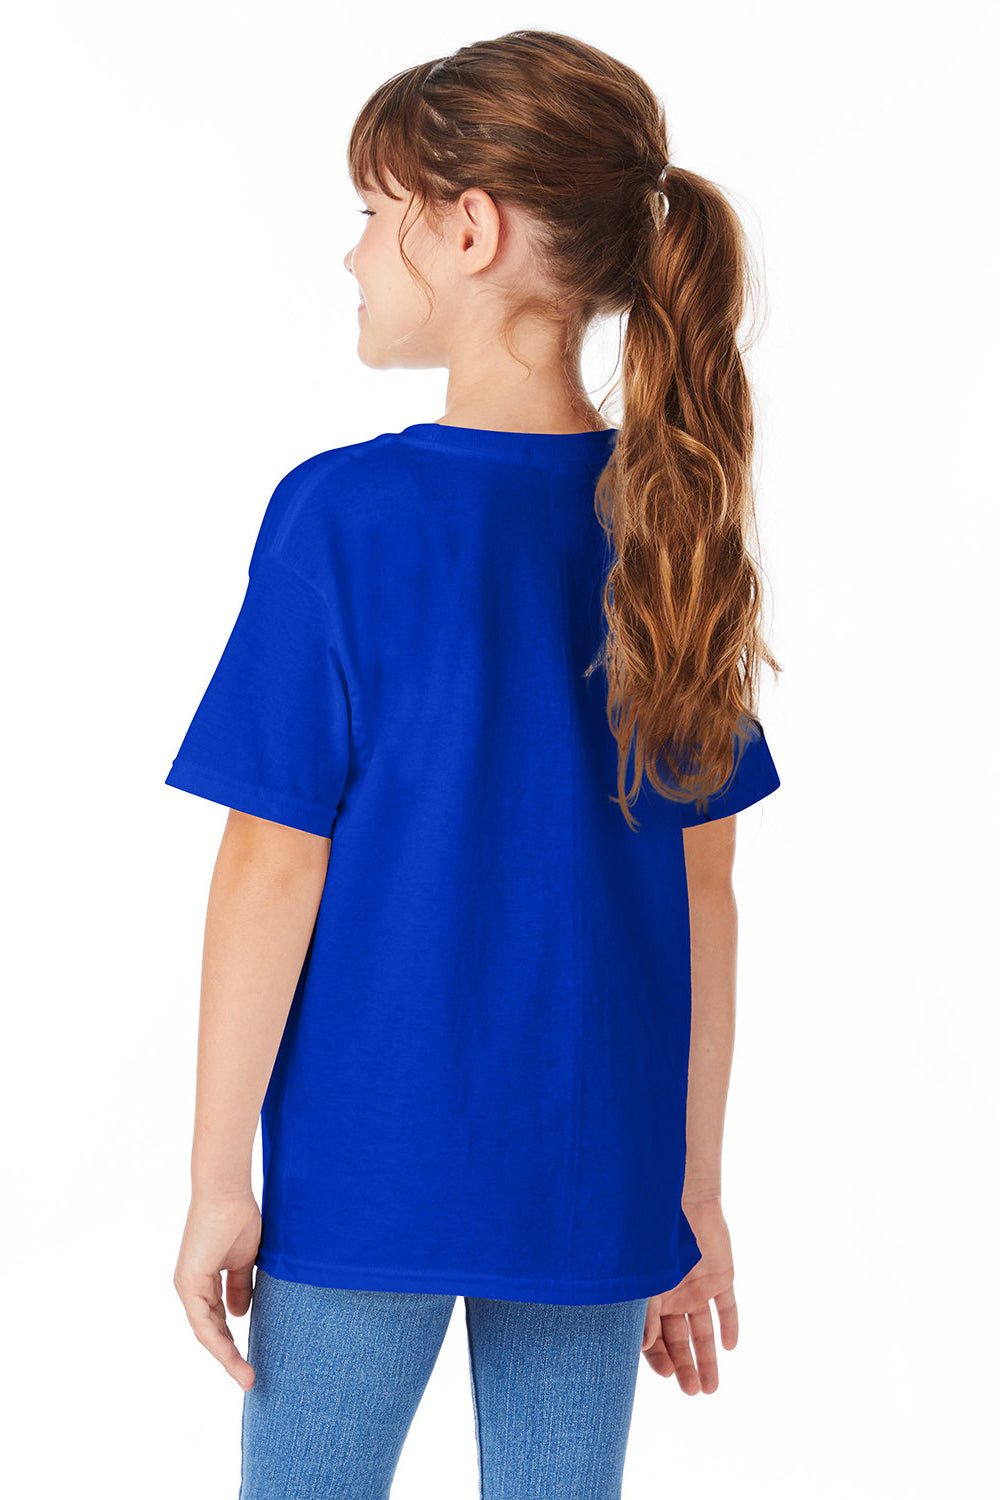 Hanes 5480 Youth ComfortSoft Short Sleeve Crewneck T-Shirt Athletic Royal Blue Back